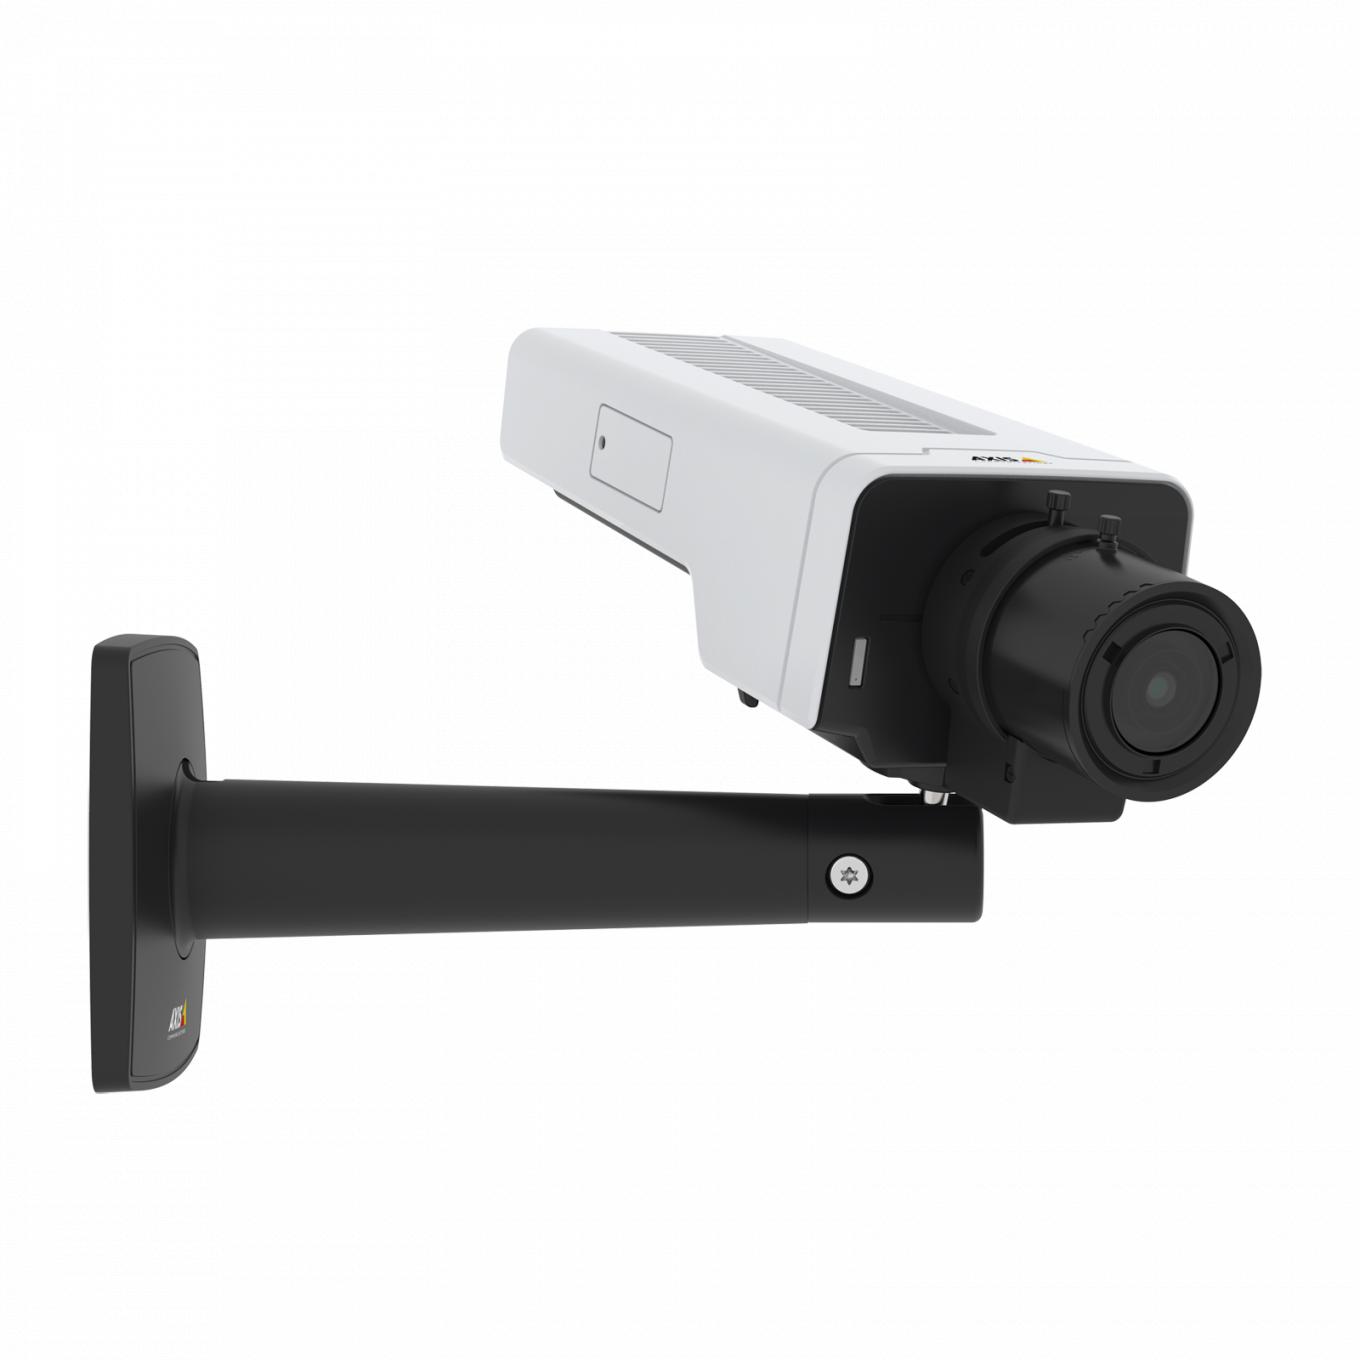 AXIS P1377 IP Camera는 Lightfinder 및 Forensic WDR을 제공합니다. 이 제품은 오른쪽 각도에서 본 것입니다.